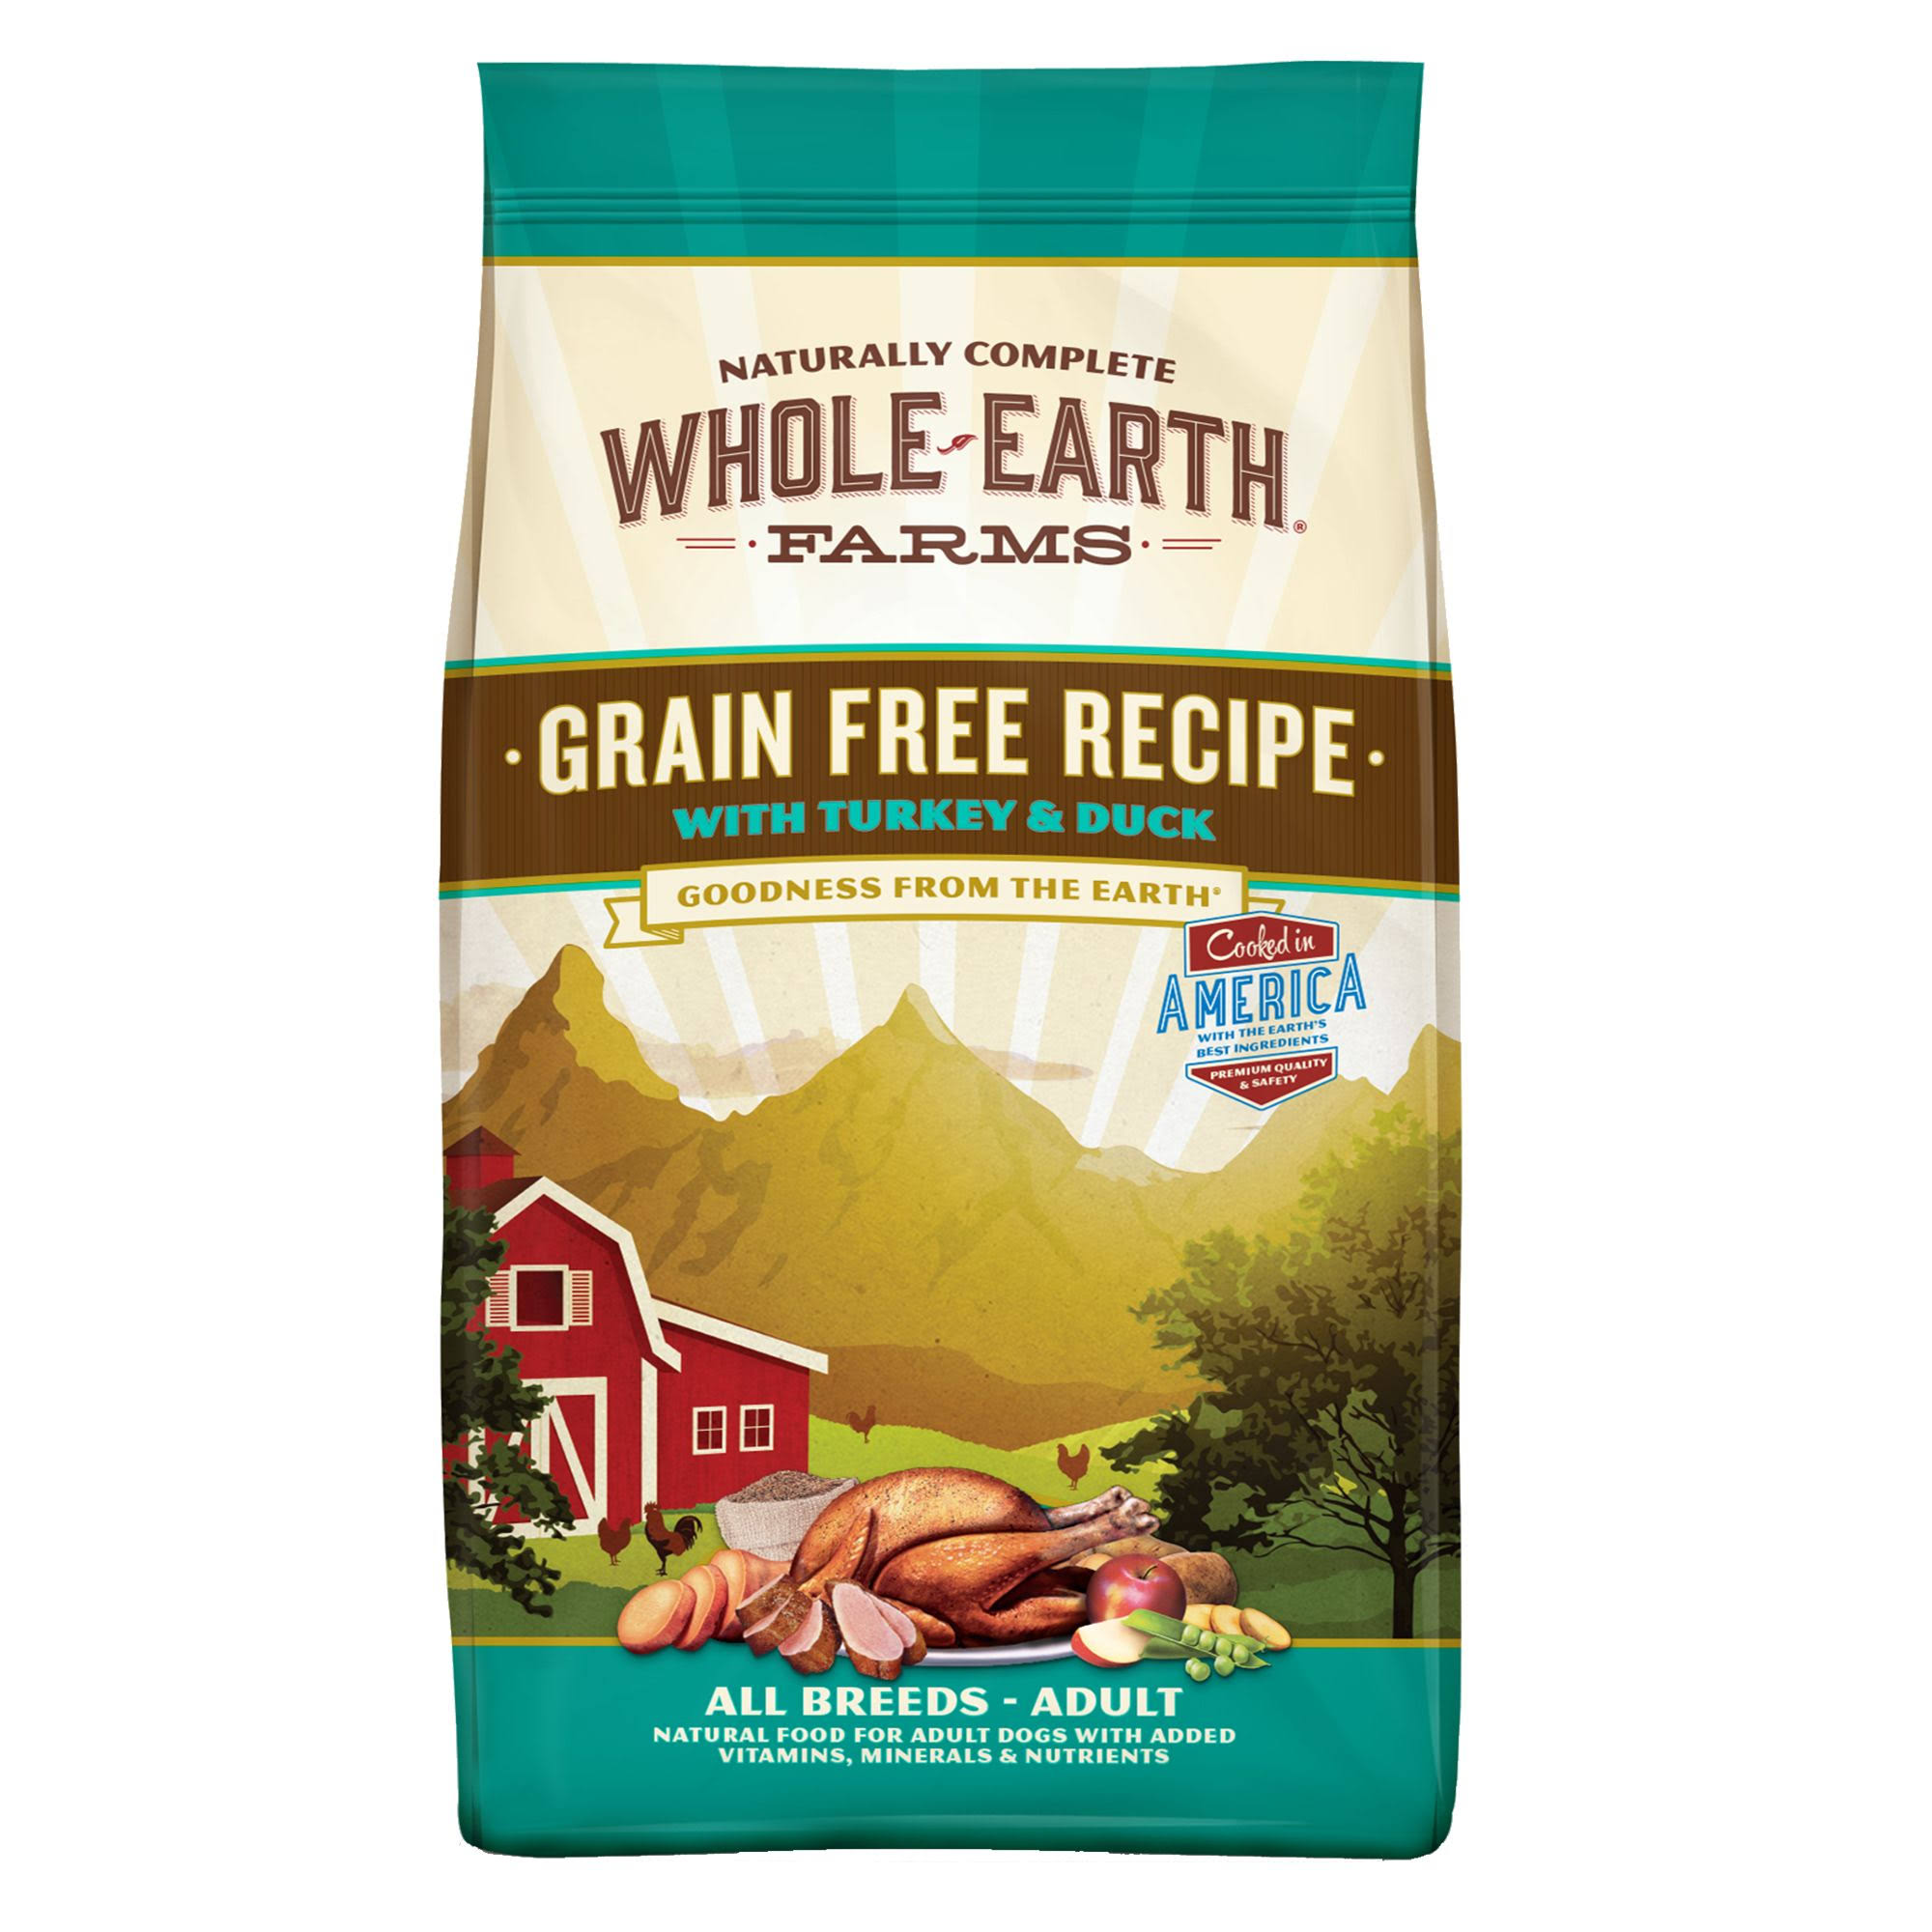 Whole Earth Farms Grain Free Recipe Dry Dog Food - Turkey and Duck, 4lbs